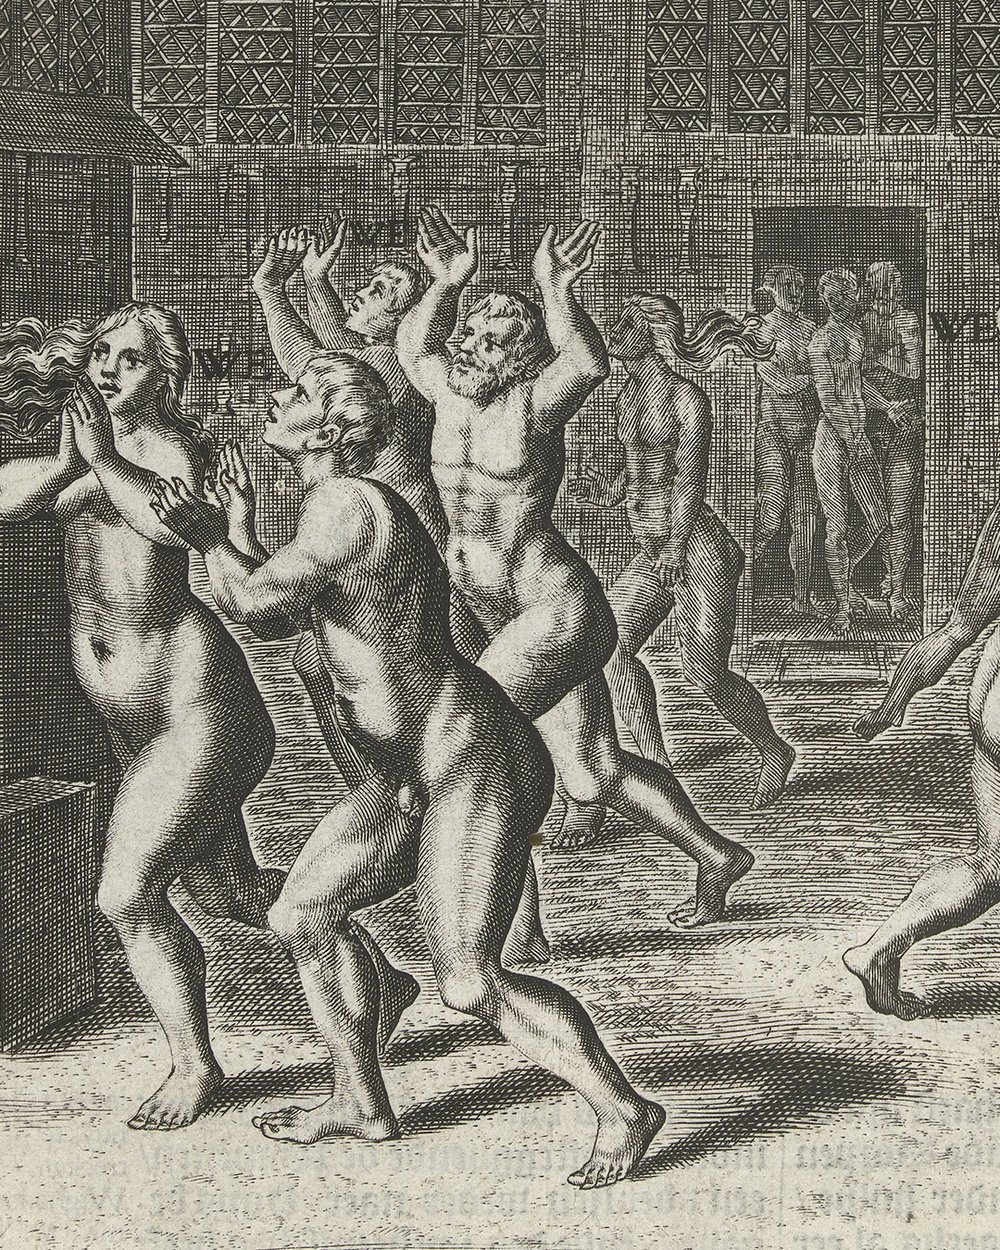 ''Nude runners in Amsterdam'' (1612 - 1614)